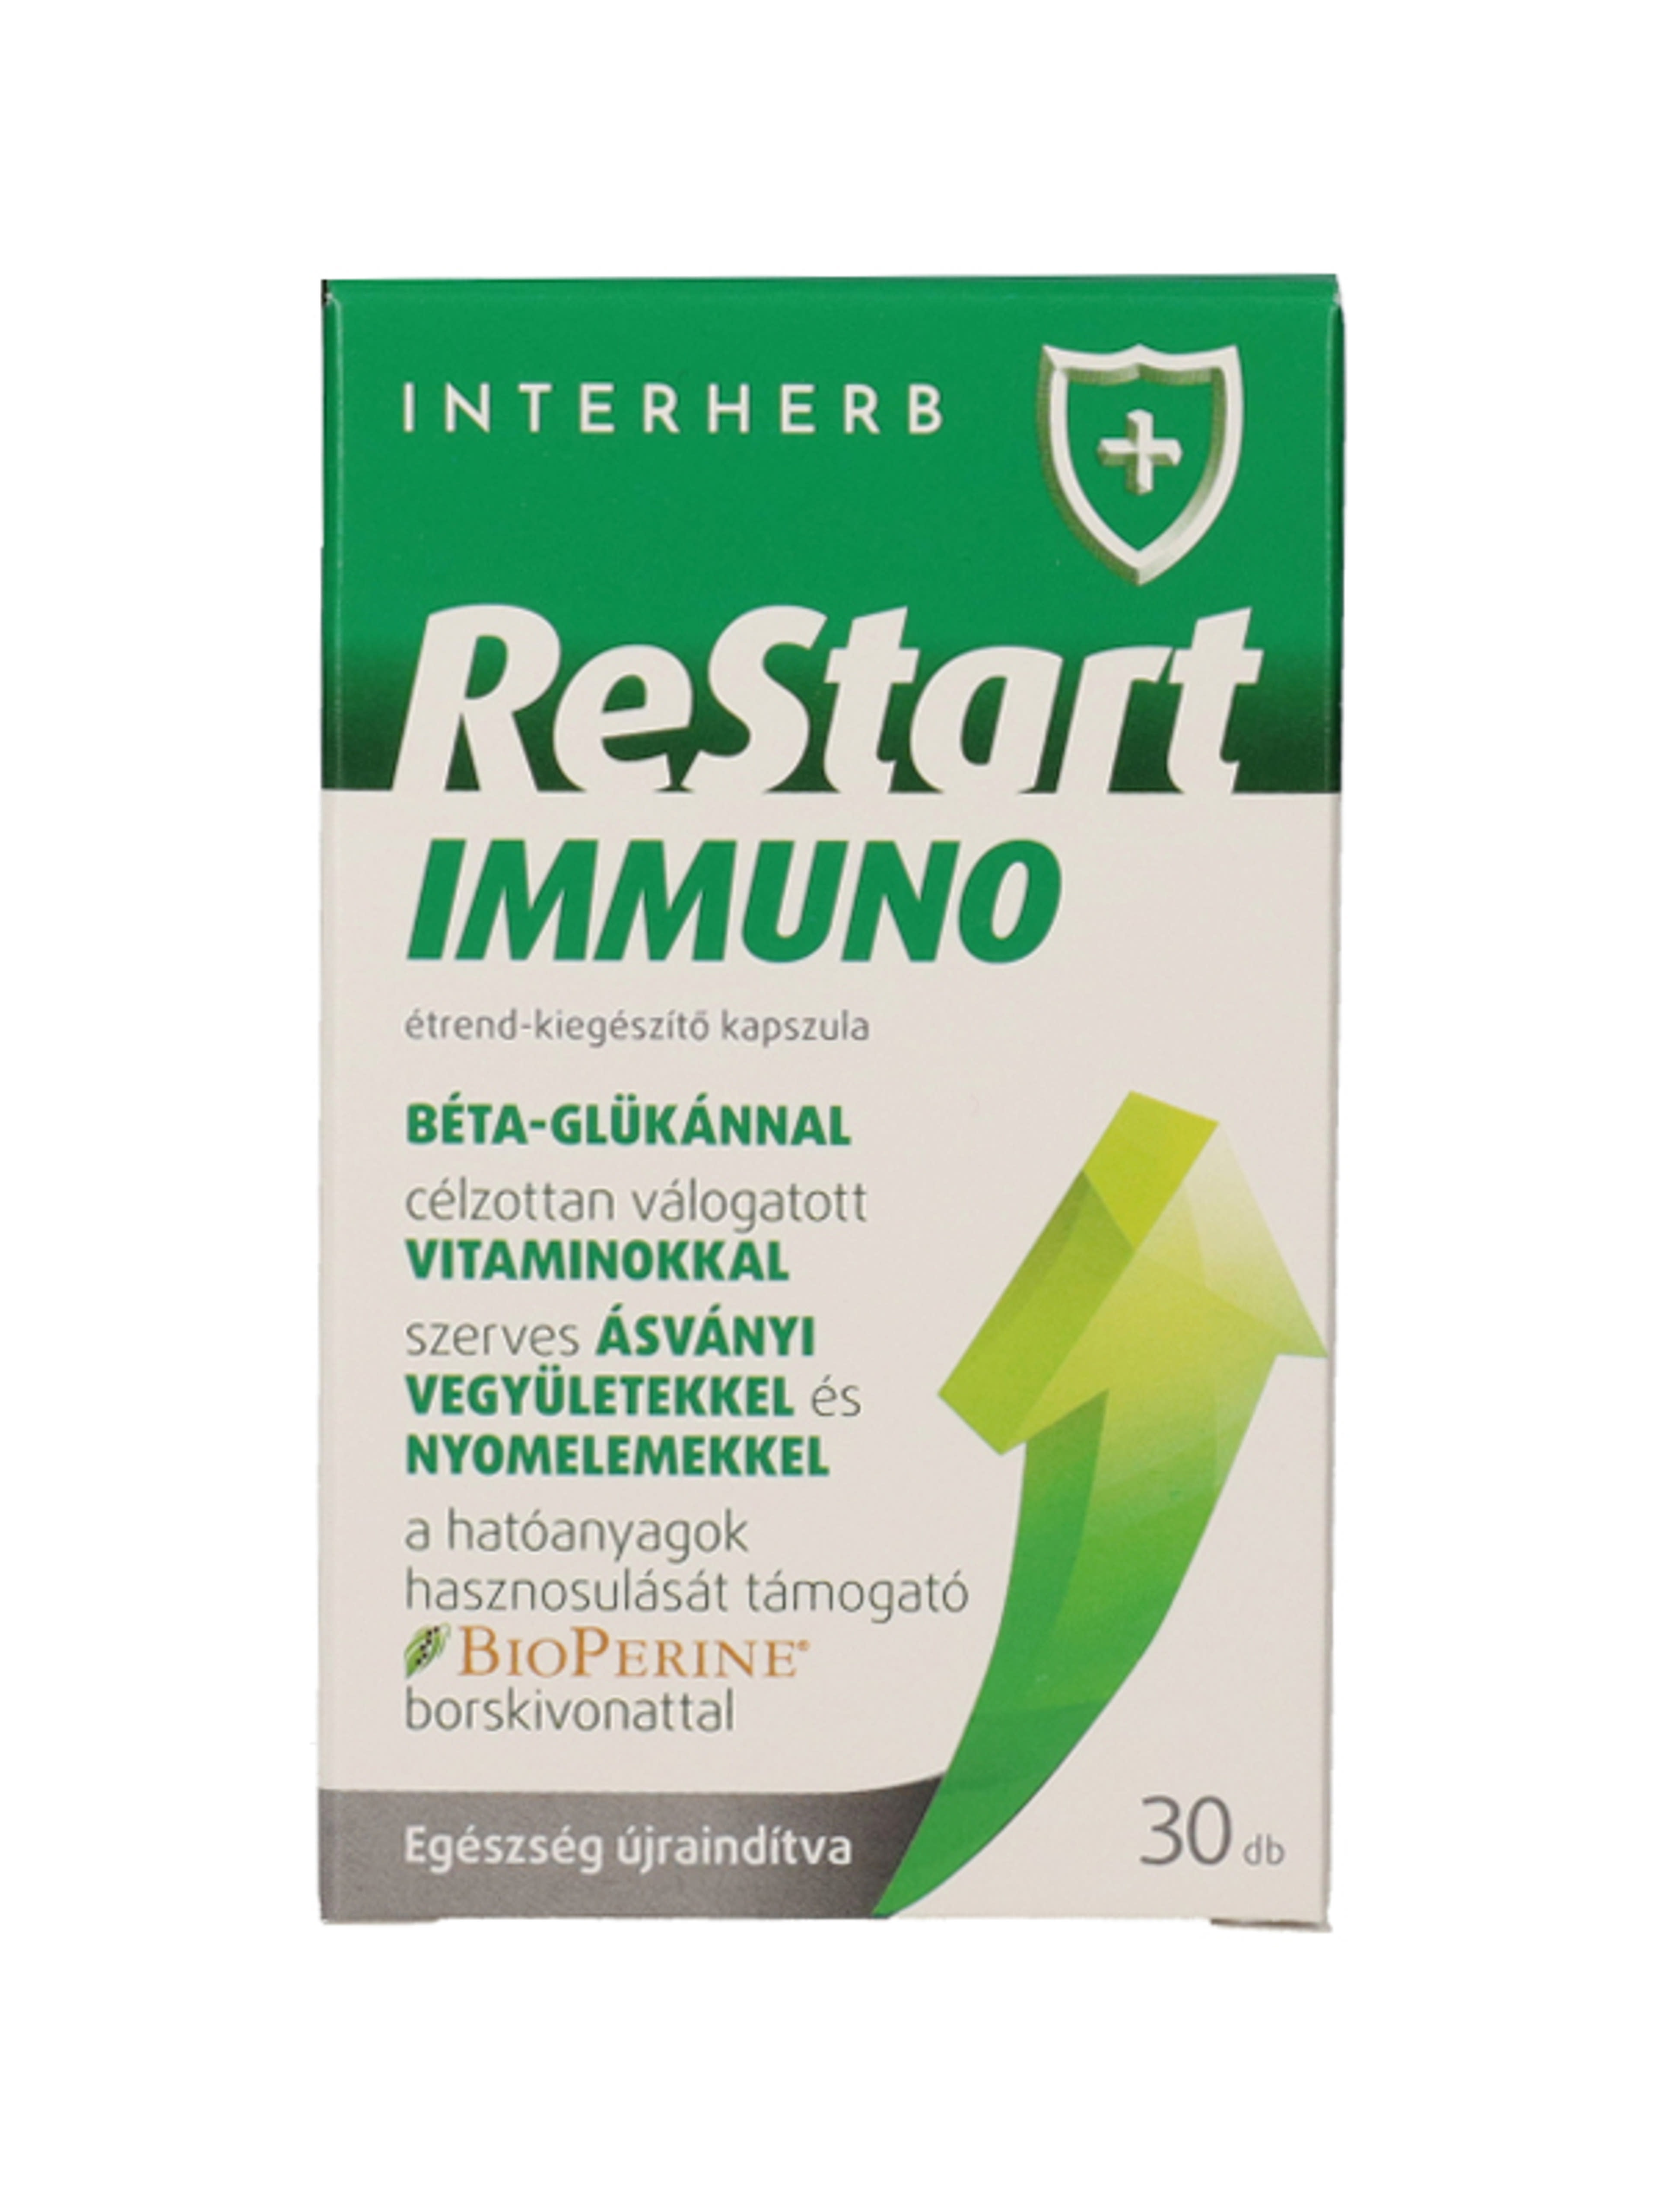 Interherb Restart Immuno kapszula - 30 db-1